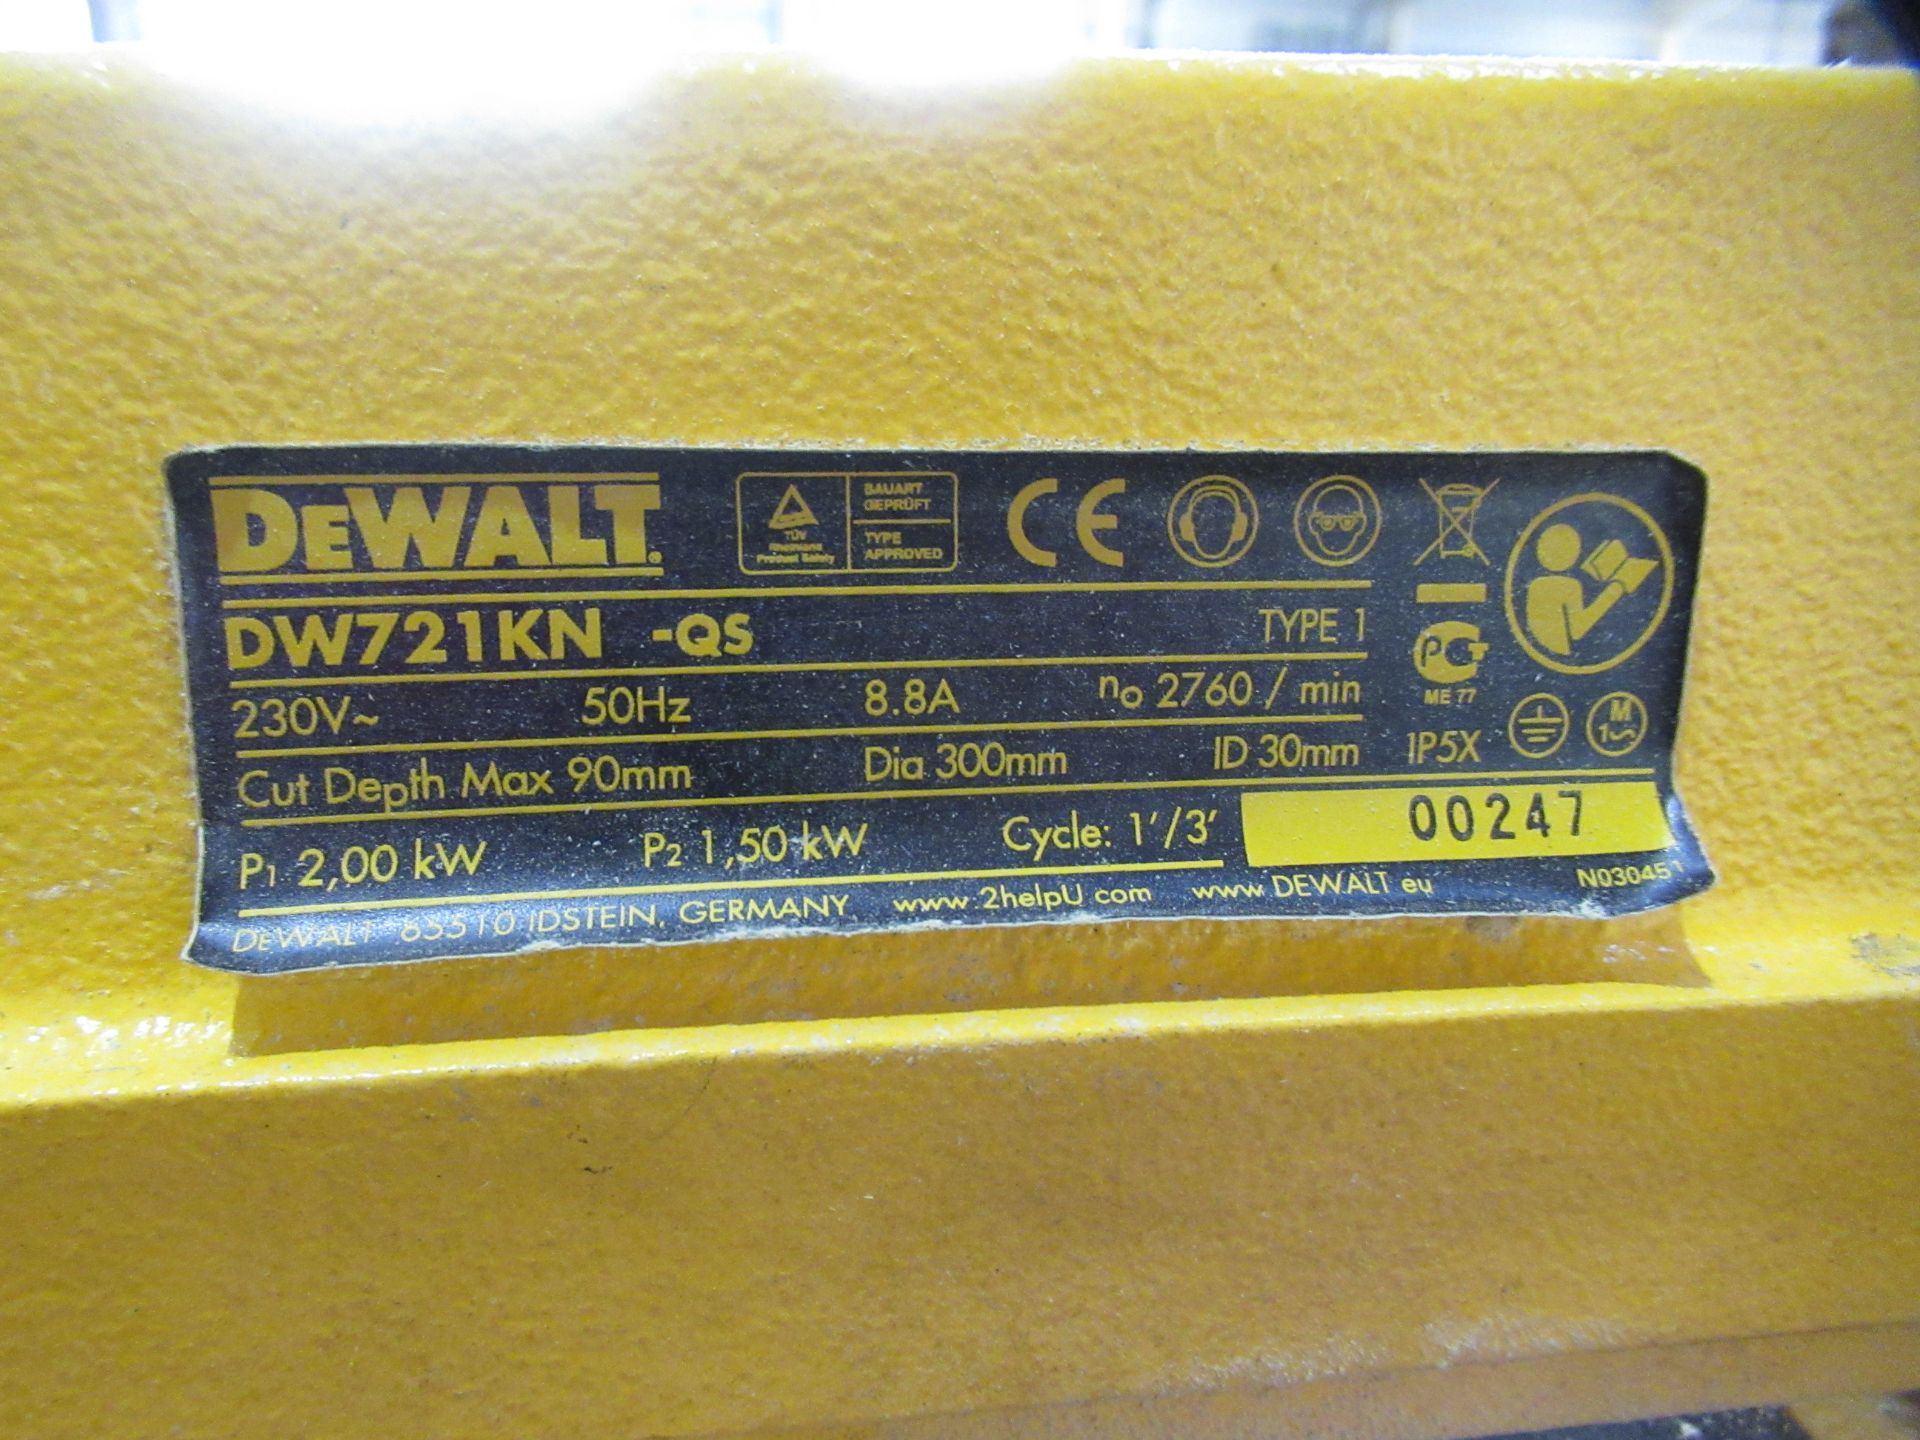 DeWalt DW721KN Radial Arm Saw - 230V - on Fabricated Frame (3330 x 975mm) - Image 5 of 5